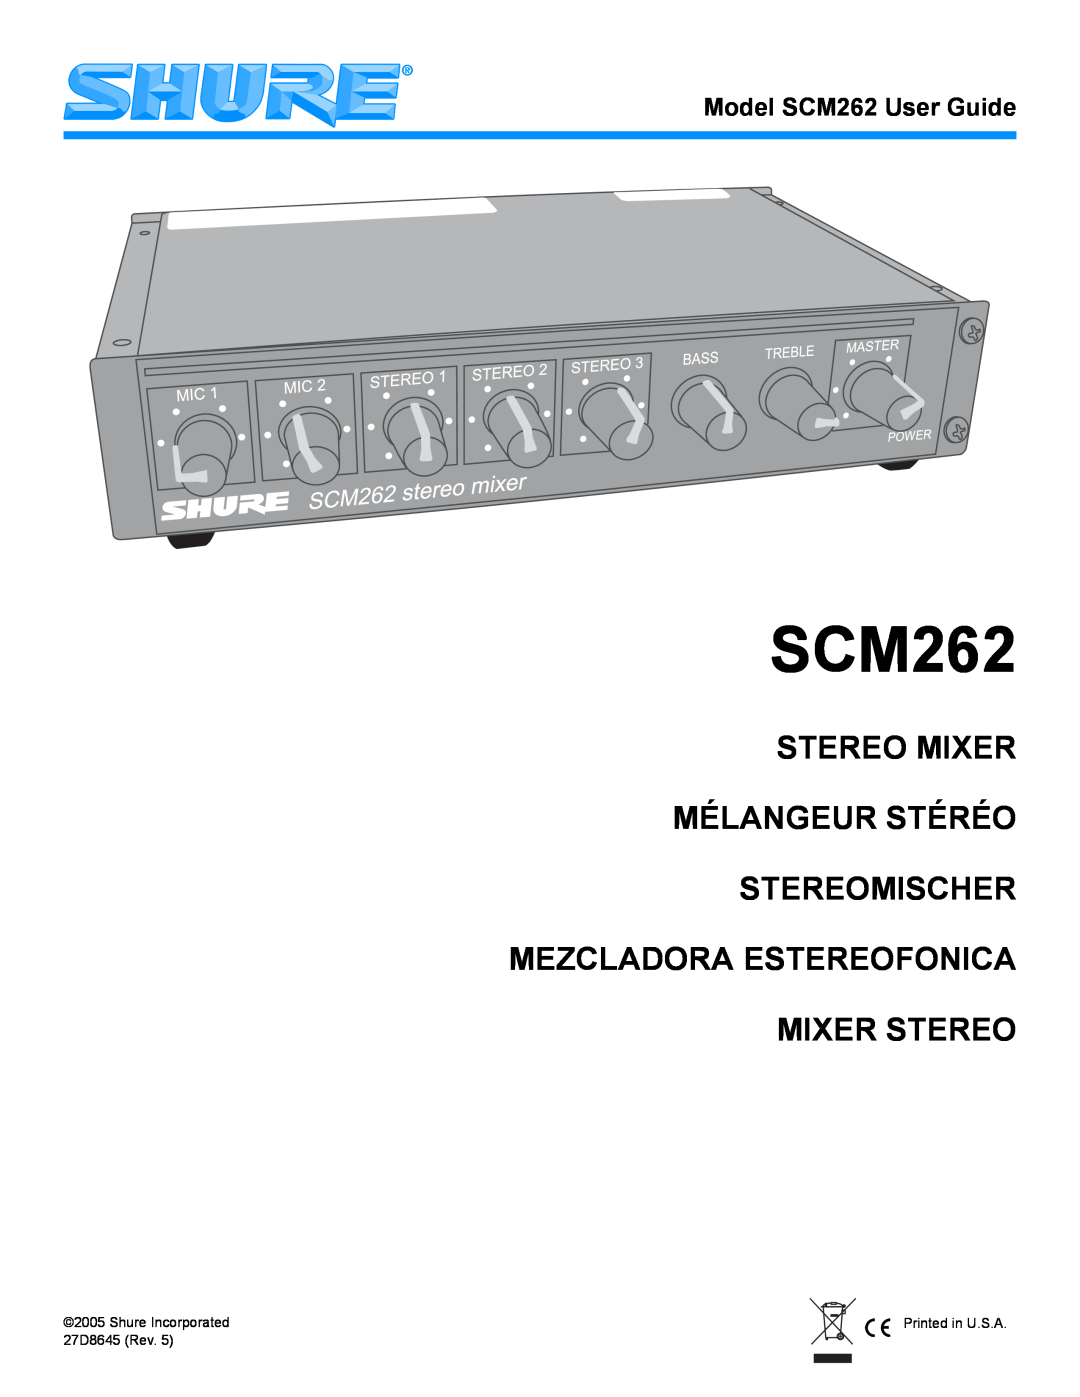 Shure SCM262 manual Stereo Mixer Mélangeur Stéréo Stereomischer, Mezcladora Estereofonica Mixer Stereo 